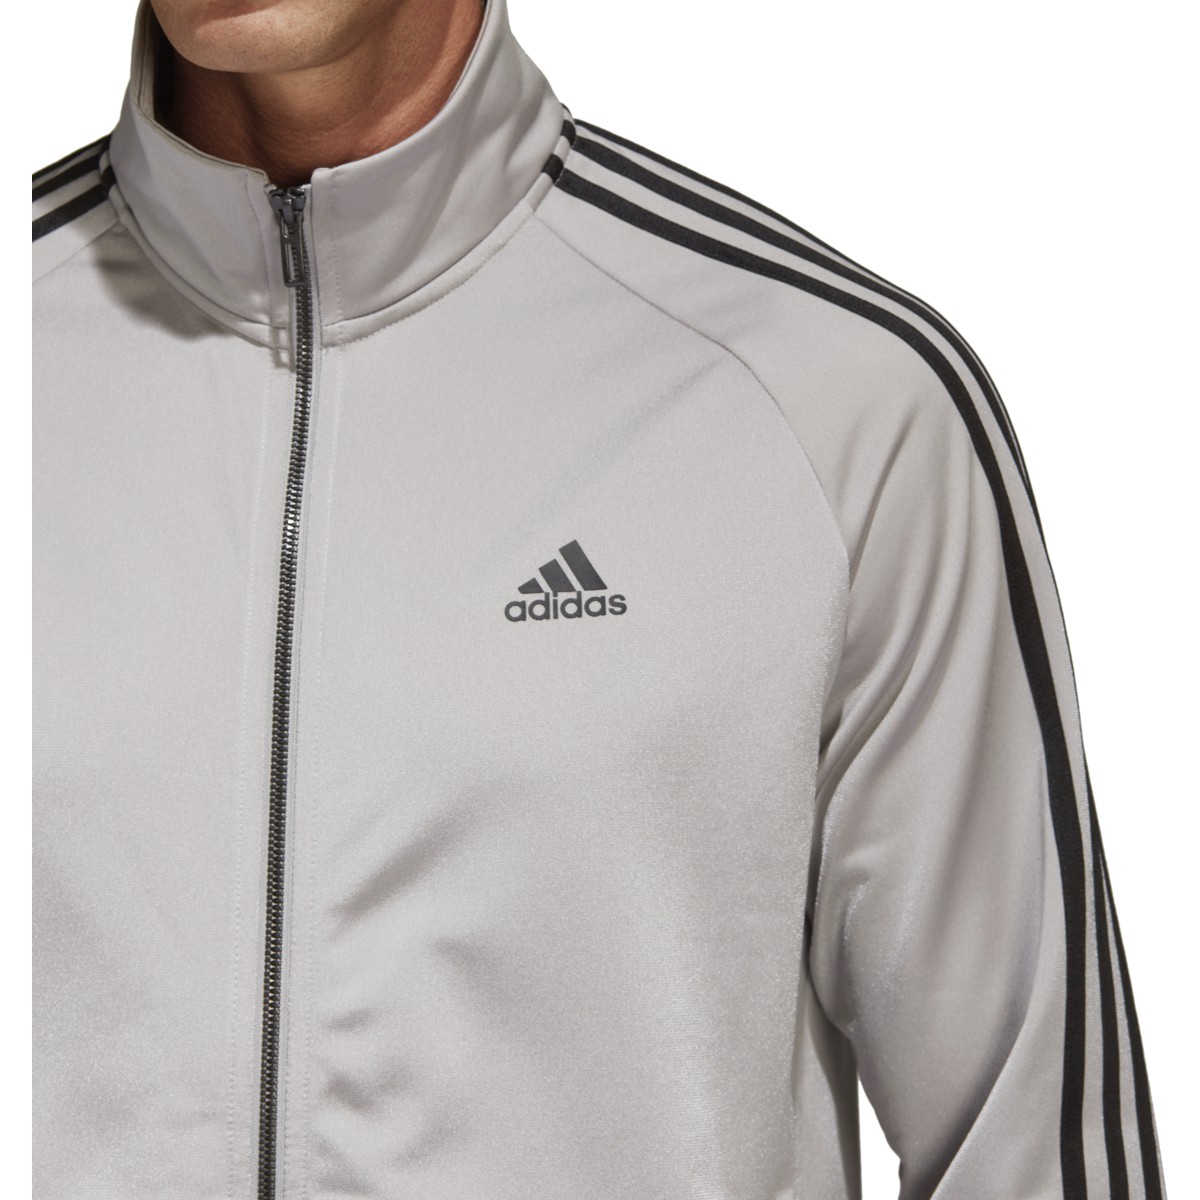 adidas Mens Essential 3-Stripes Tiro Track Jackets Sports Zipper | eBay